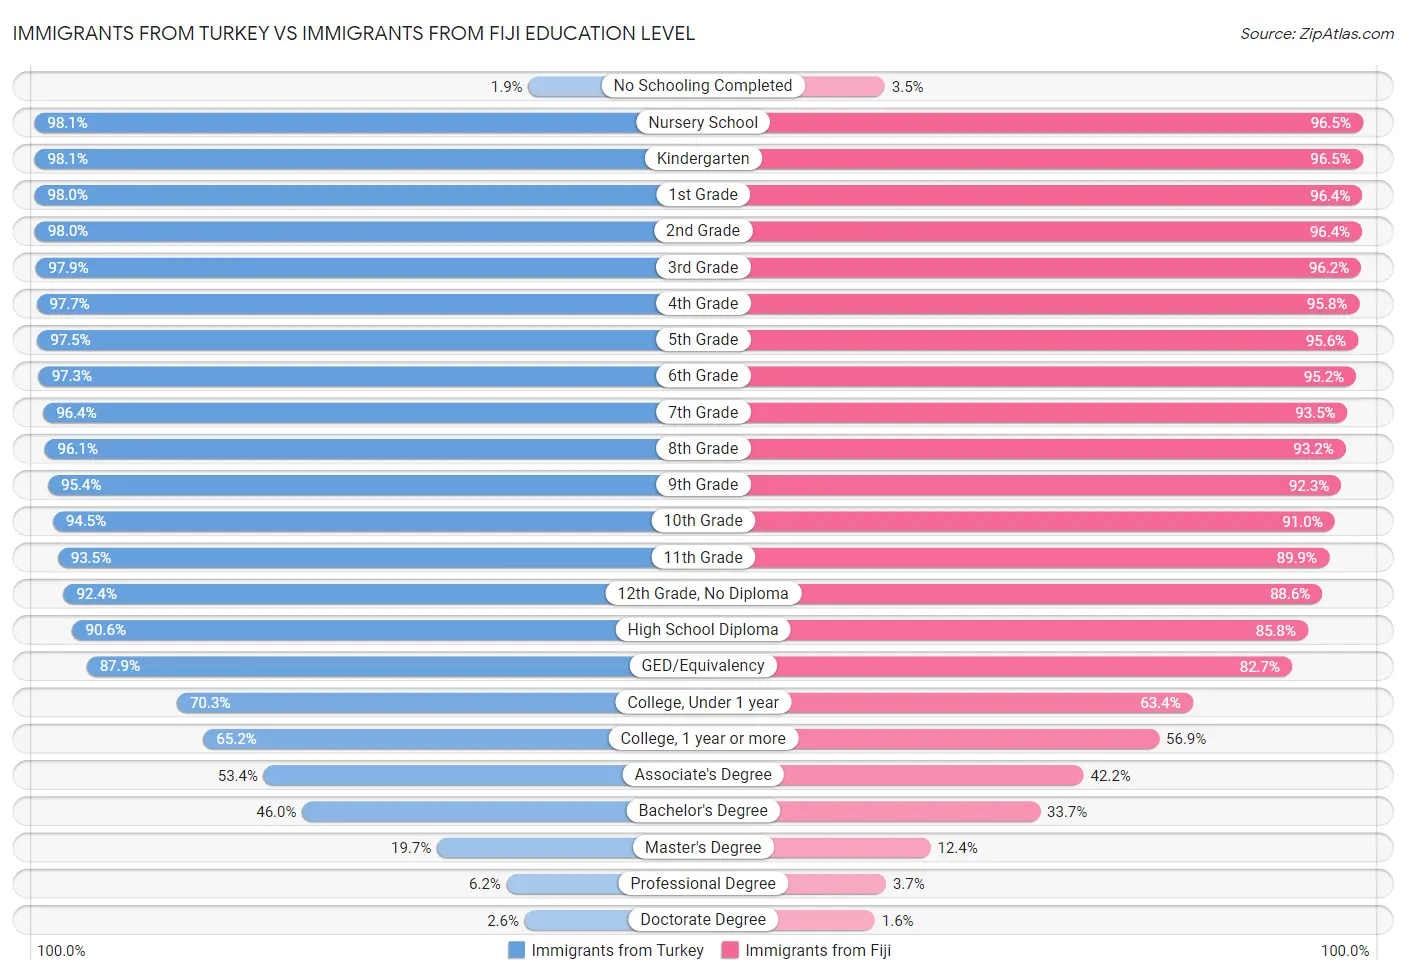 Immigrants from Turkey vs Immigrants from Fiji Education Level